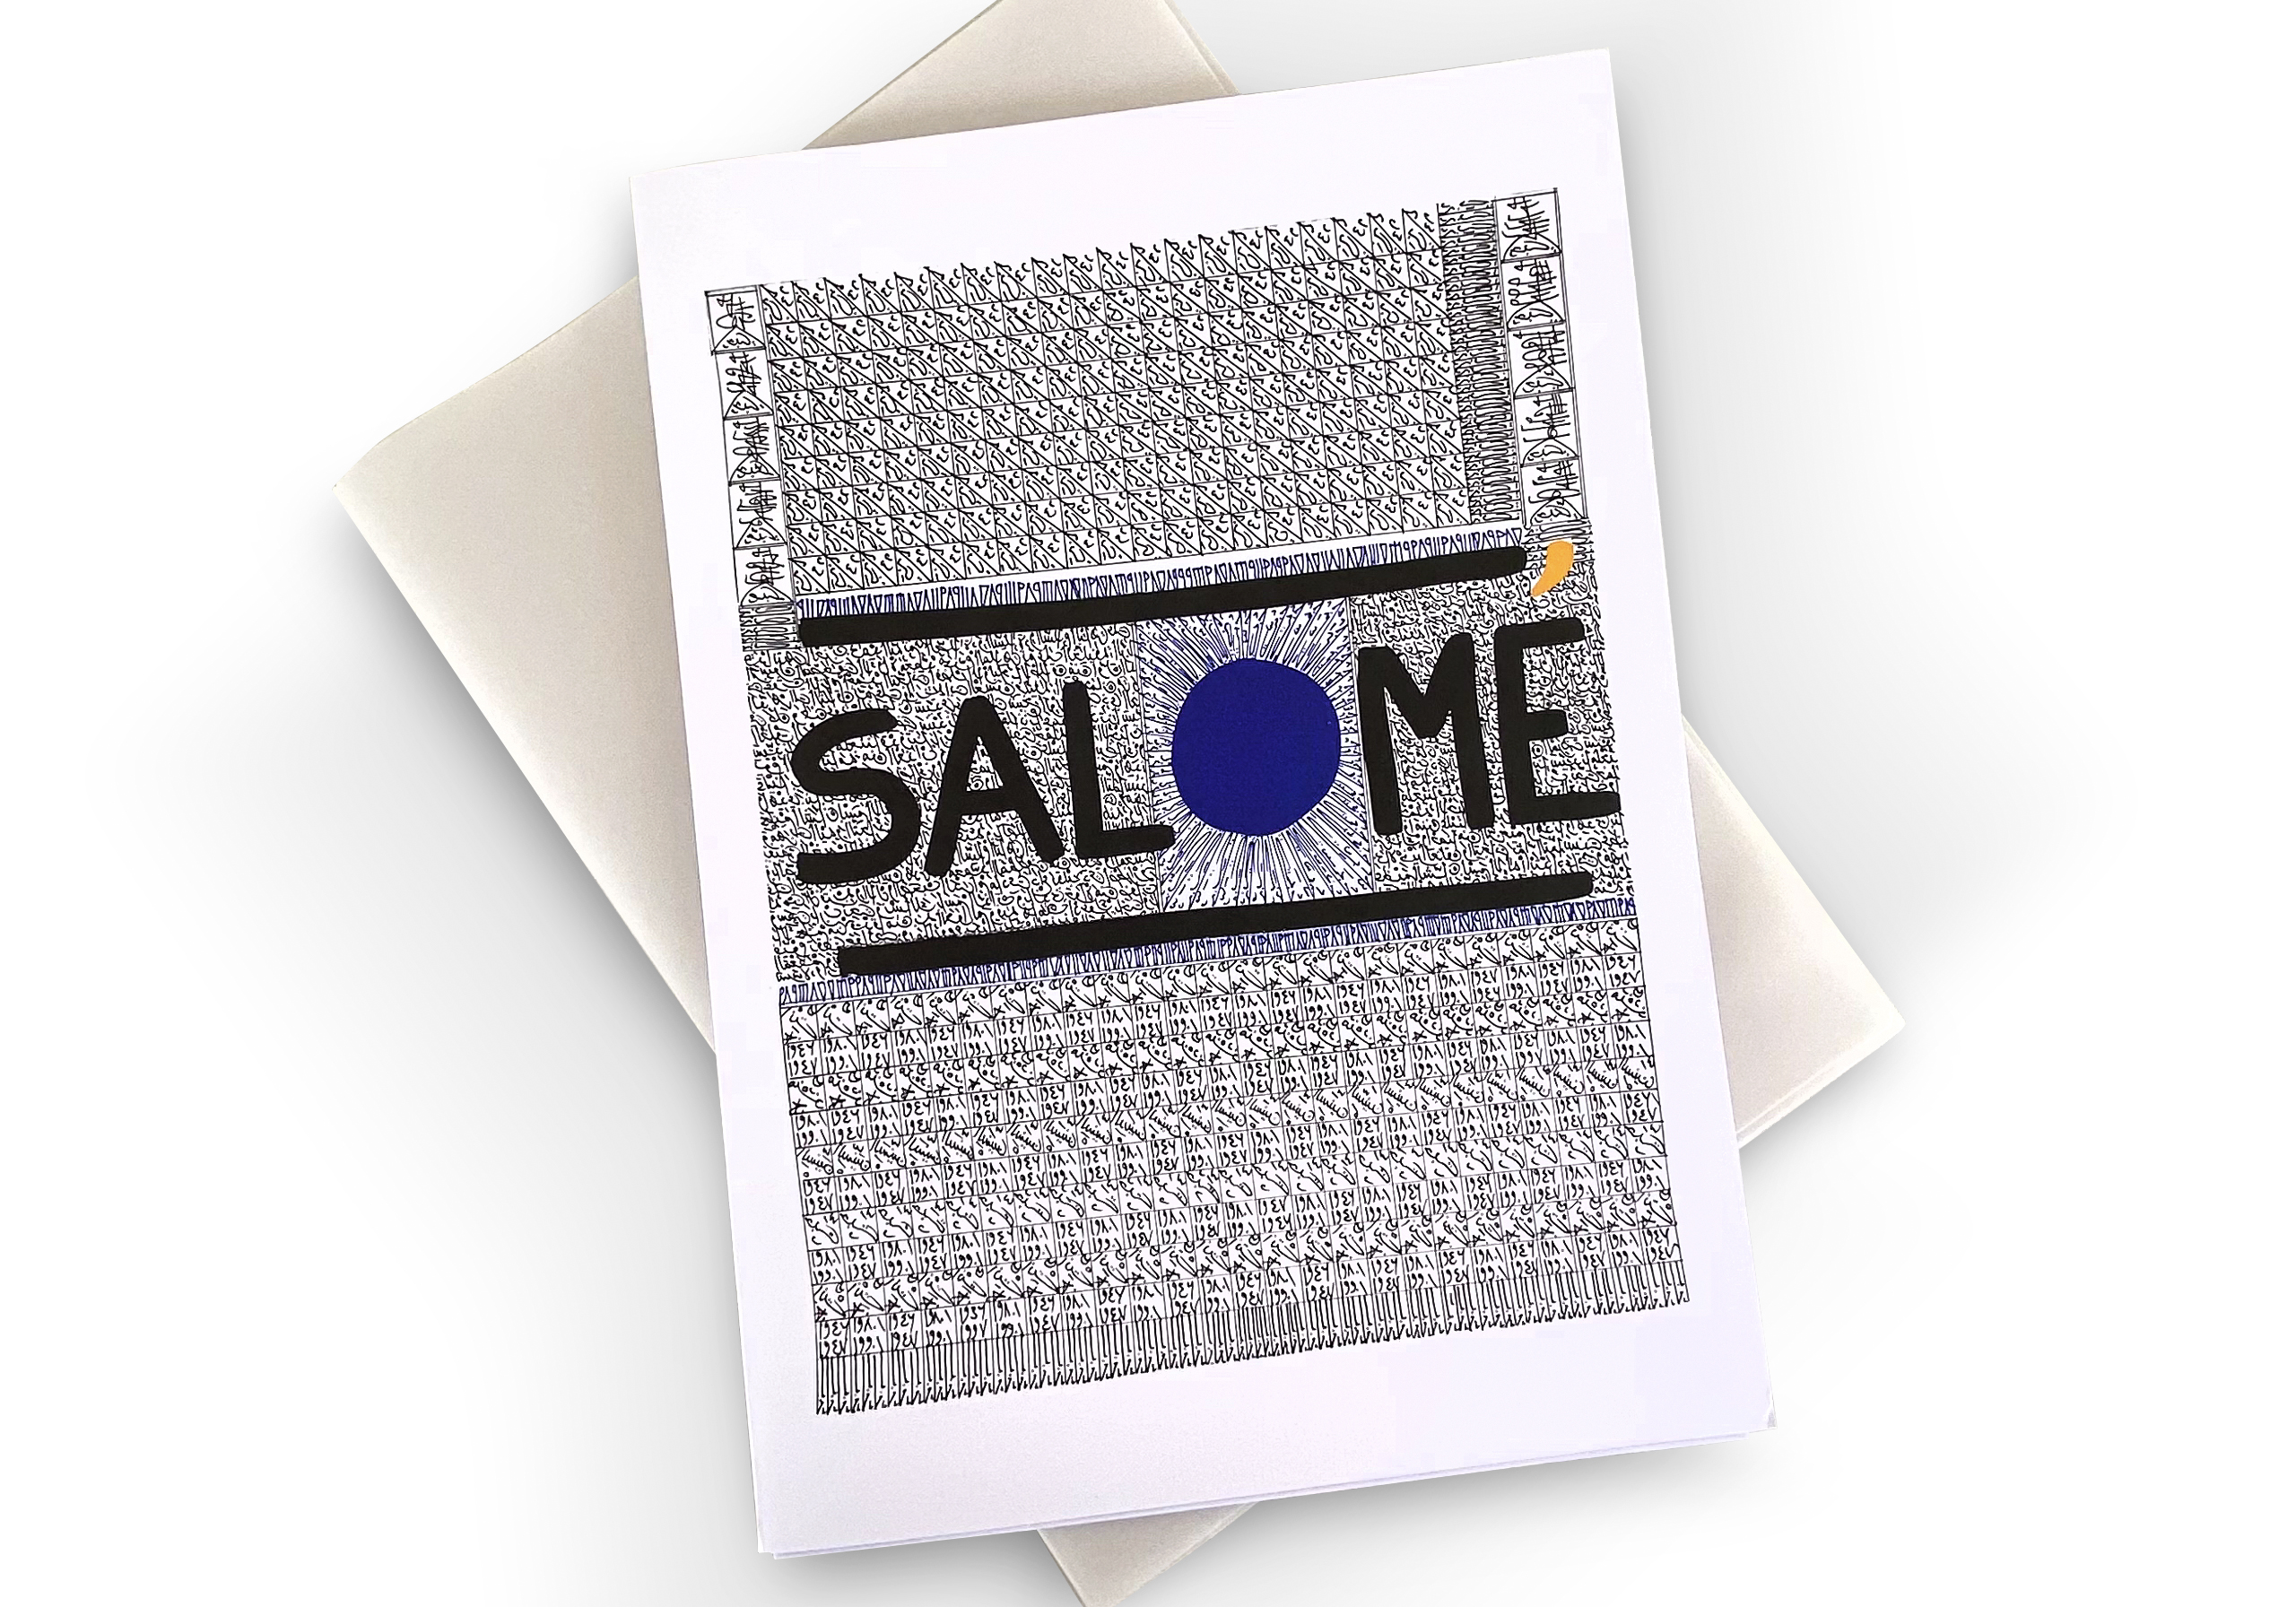 Imagen de la cubierta de "Salomé", Fuera de serie